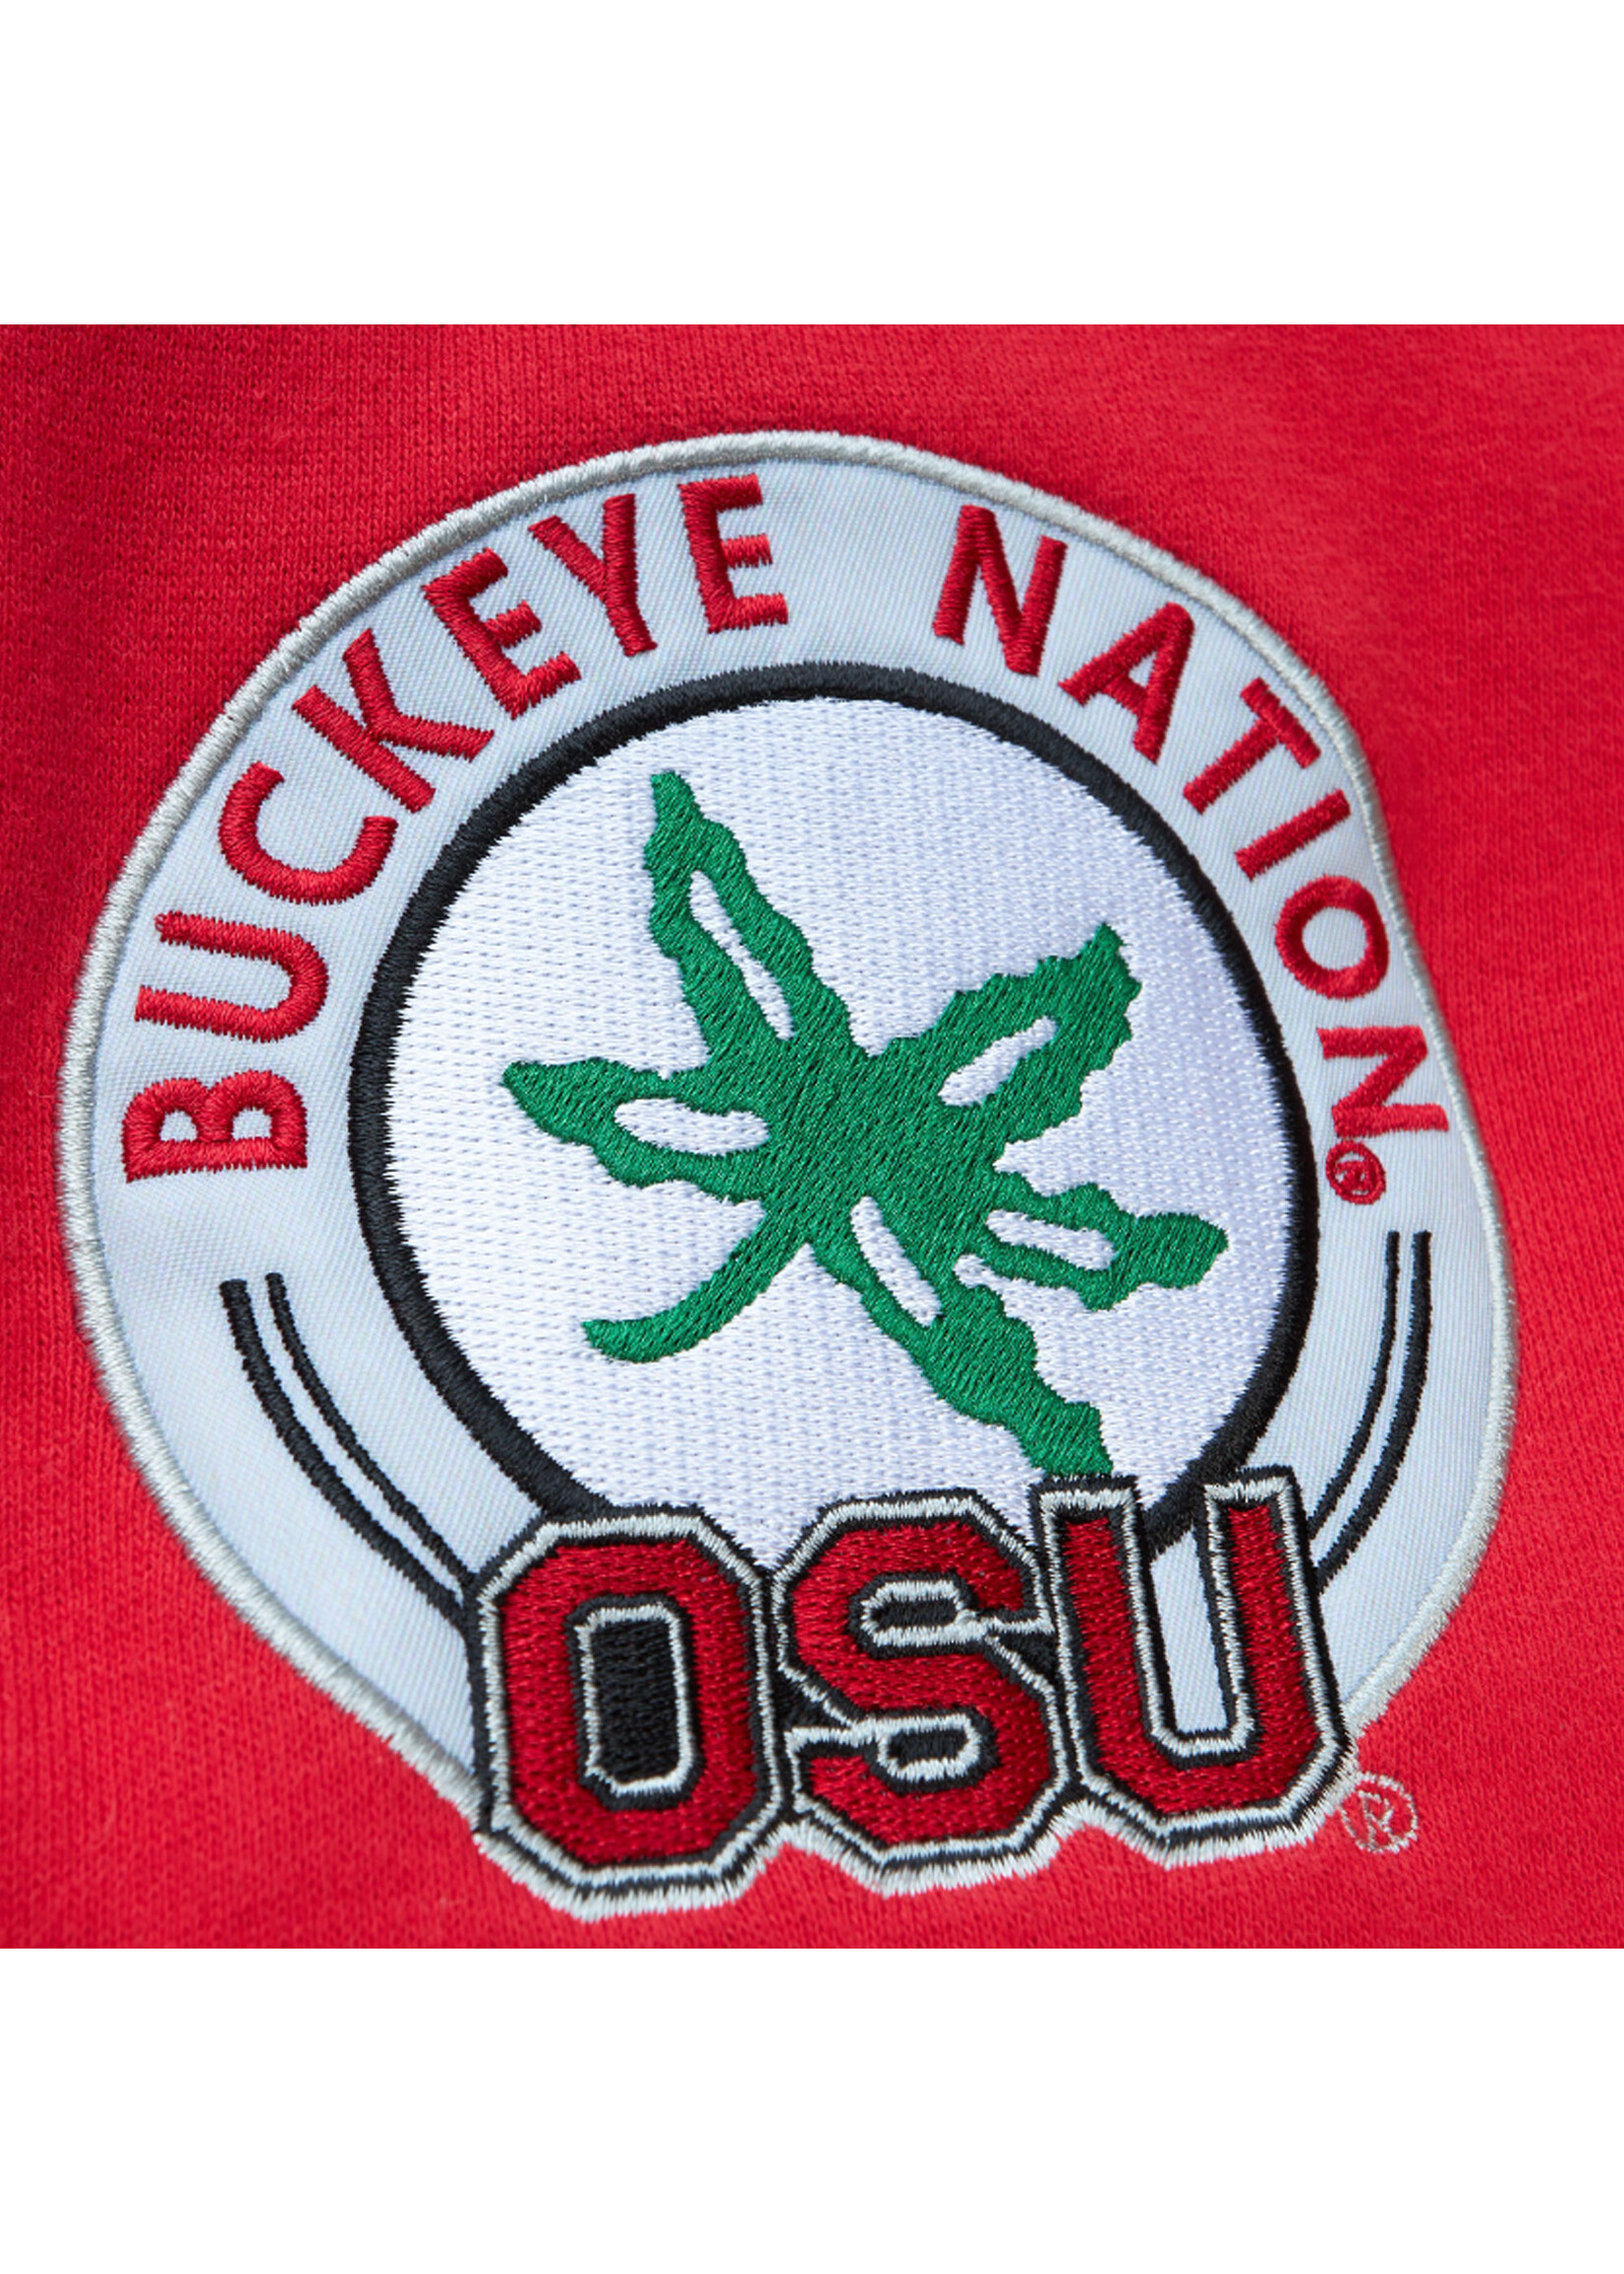 MITCHELL & NESS Ohio State Buckeyes All Over 3.0 Sweatshirt